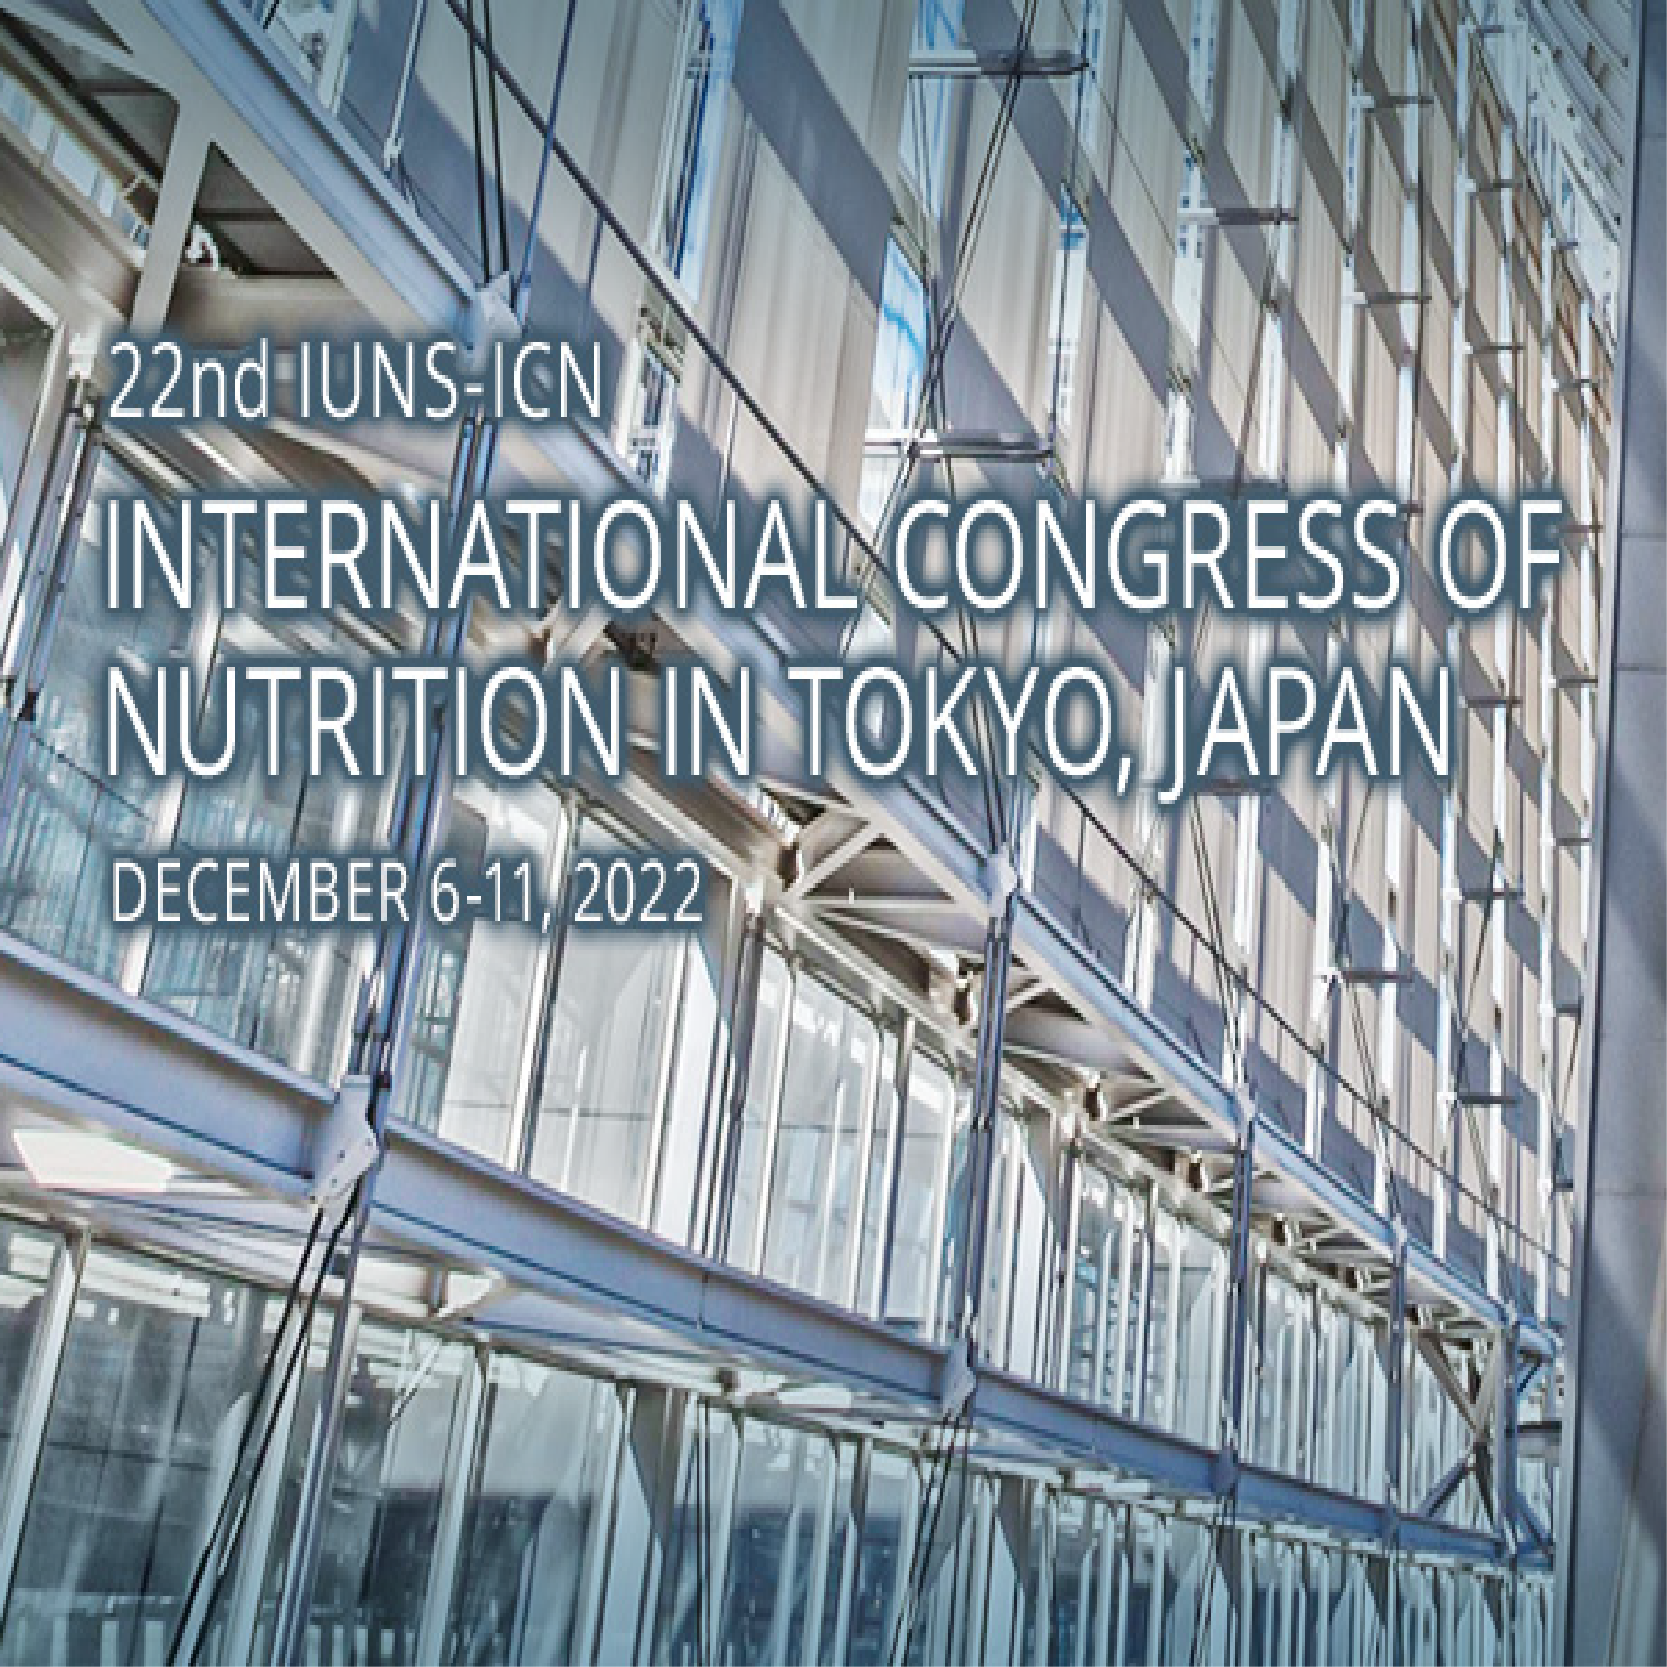 Medflixs International Union of Nutritional Sciences International